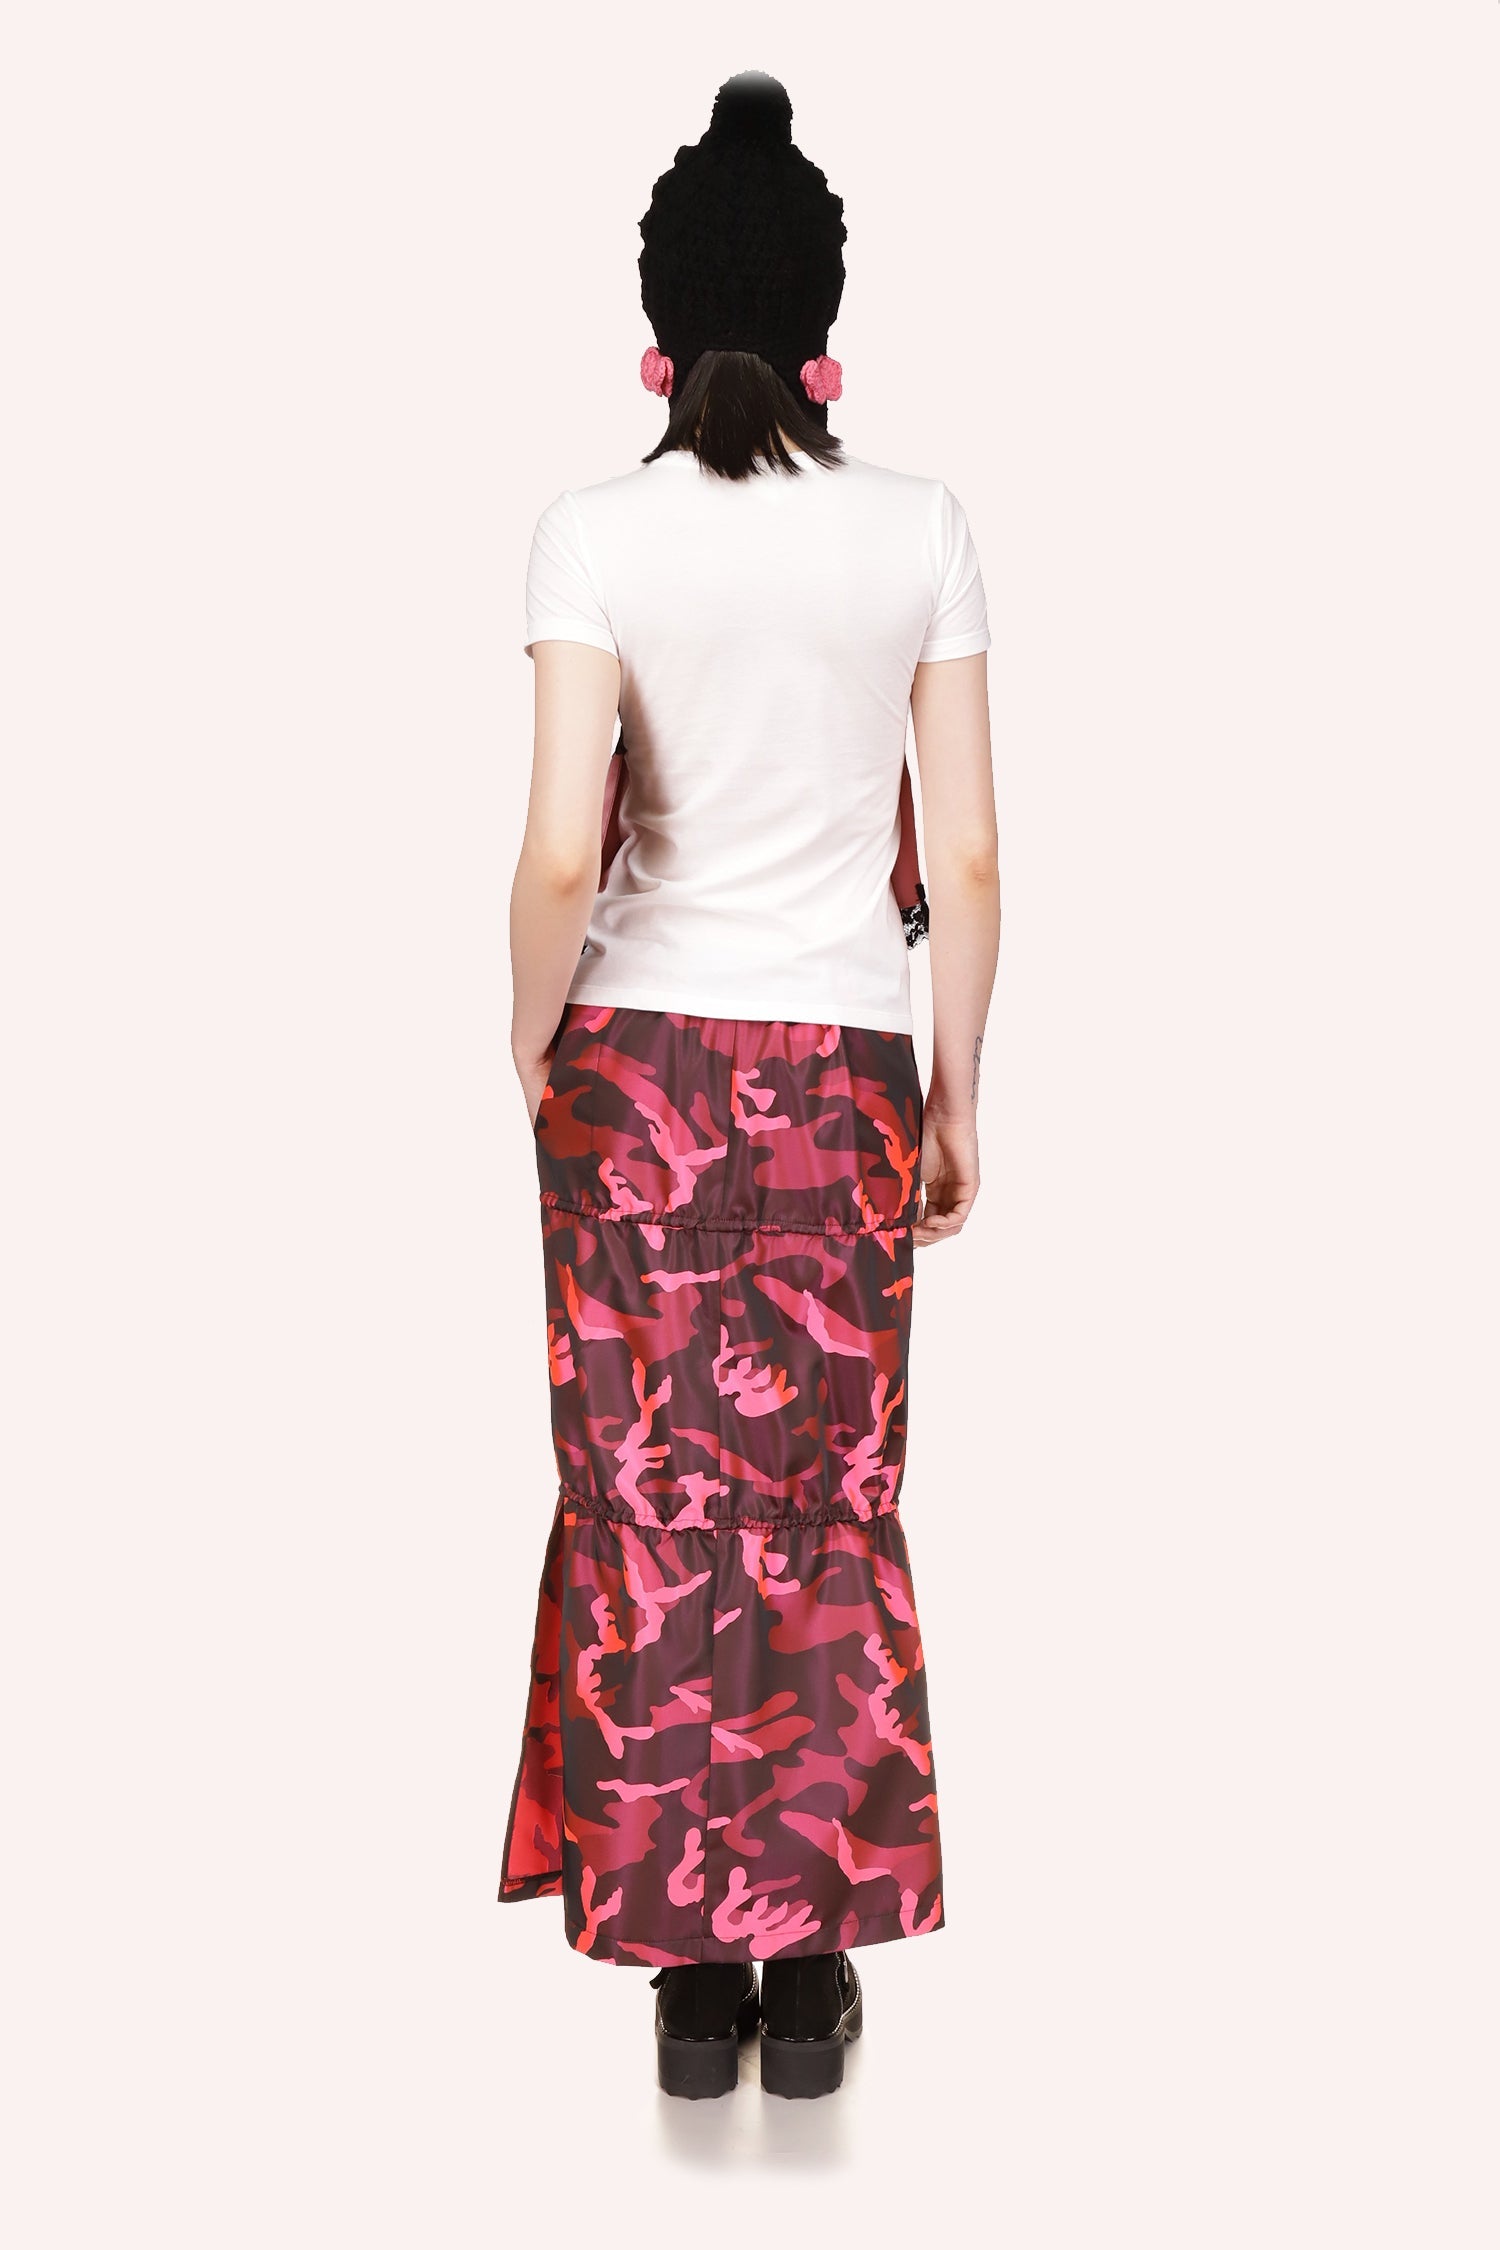 La camiseta Anna Sui's Lingerie Deco Tee Rose no tiene mangas ni espalda